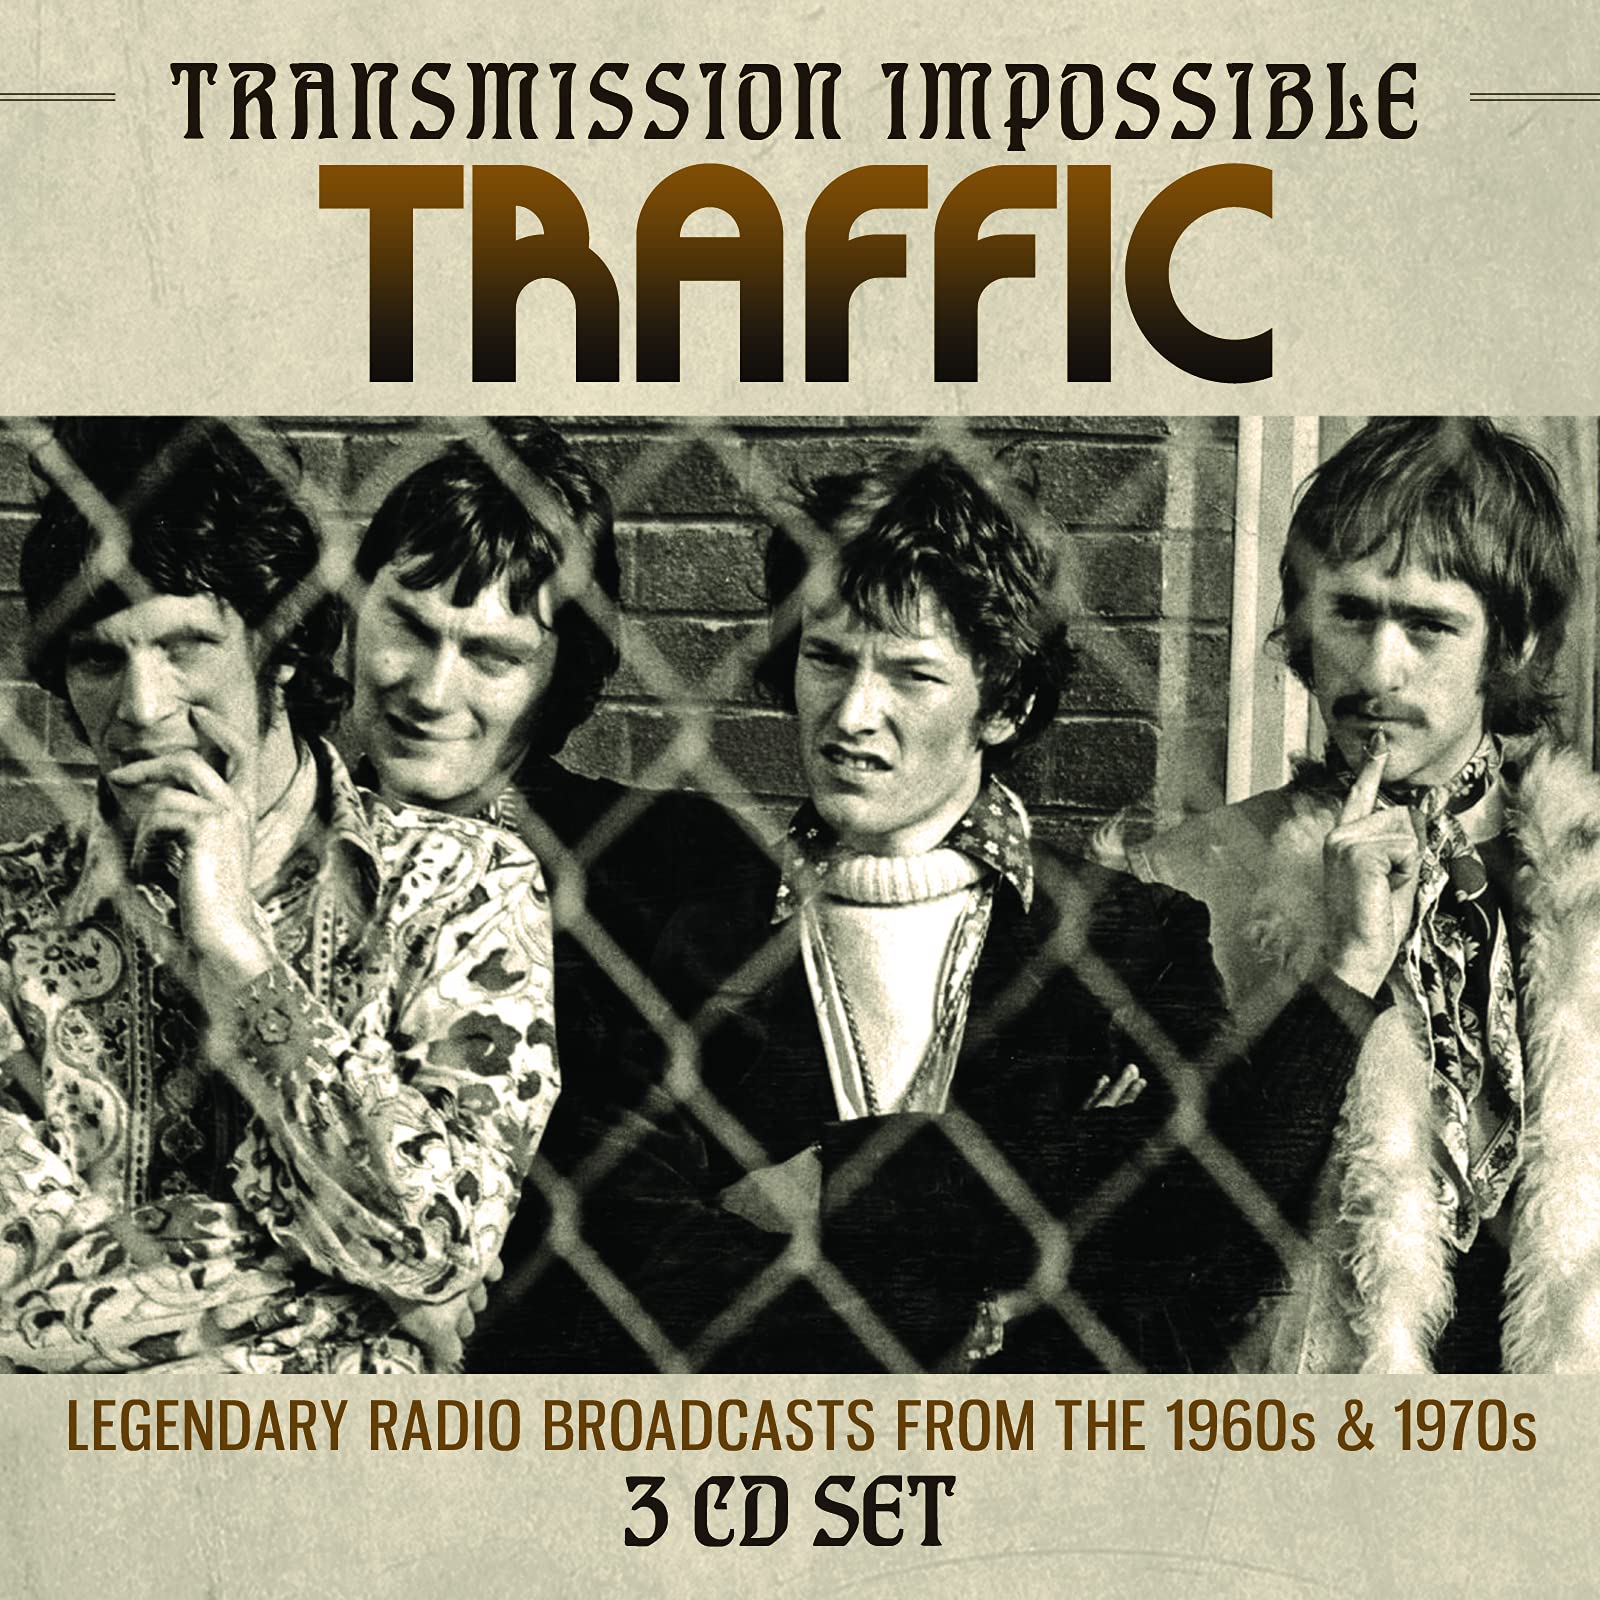 TRAFFIC - Transmission Impossible